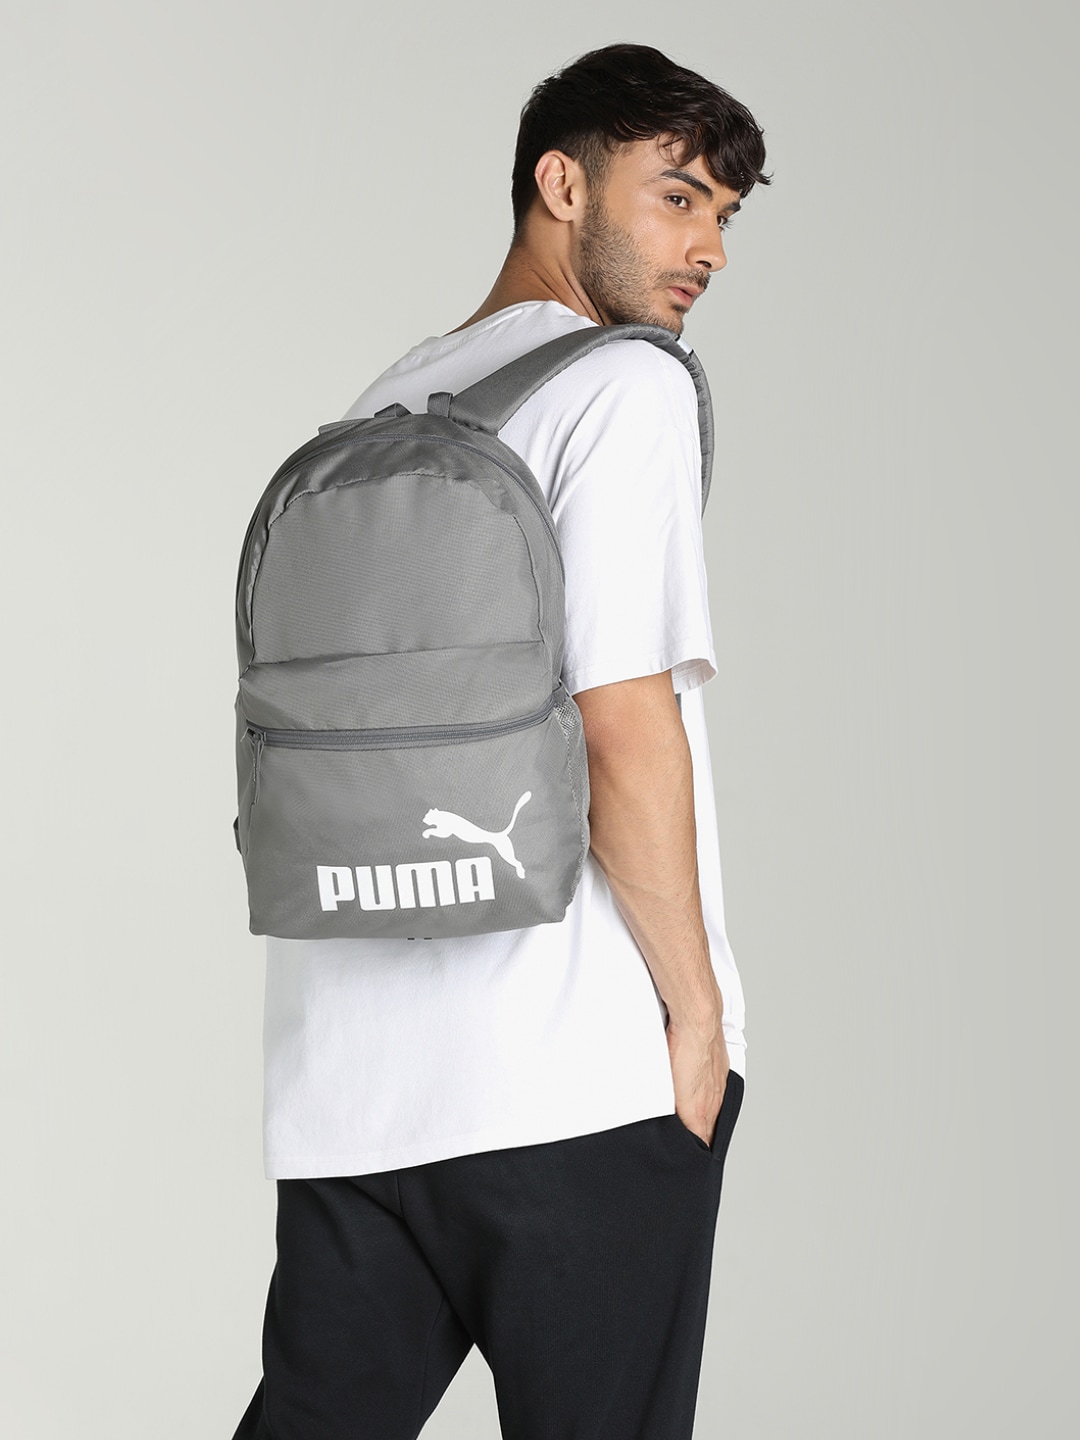 Puma Unisex Grey Brand Logo Phase Backpack Price in India